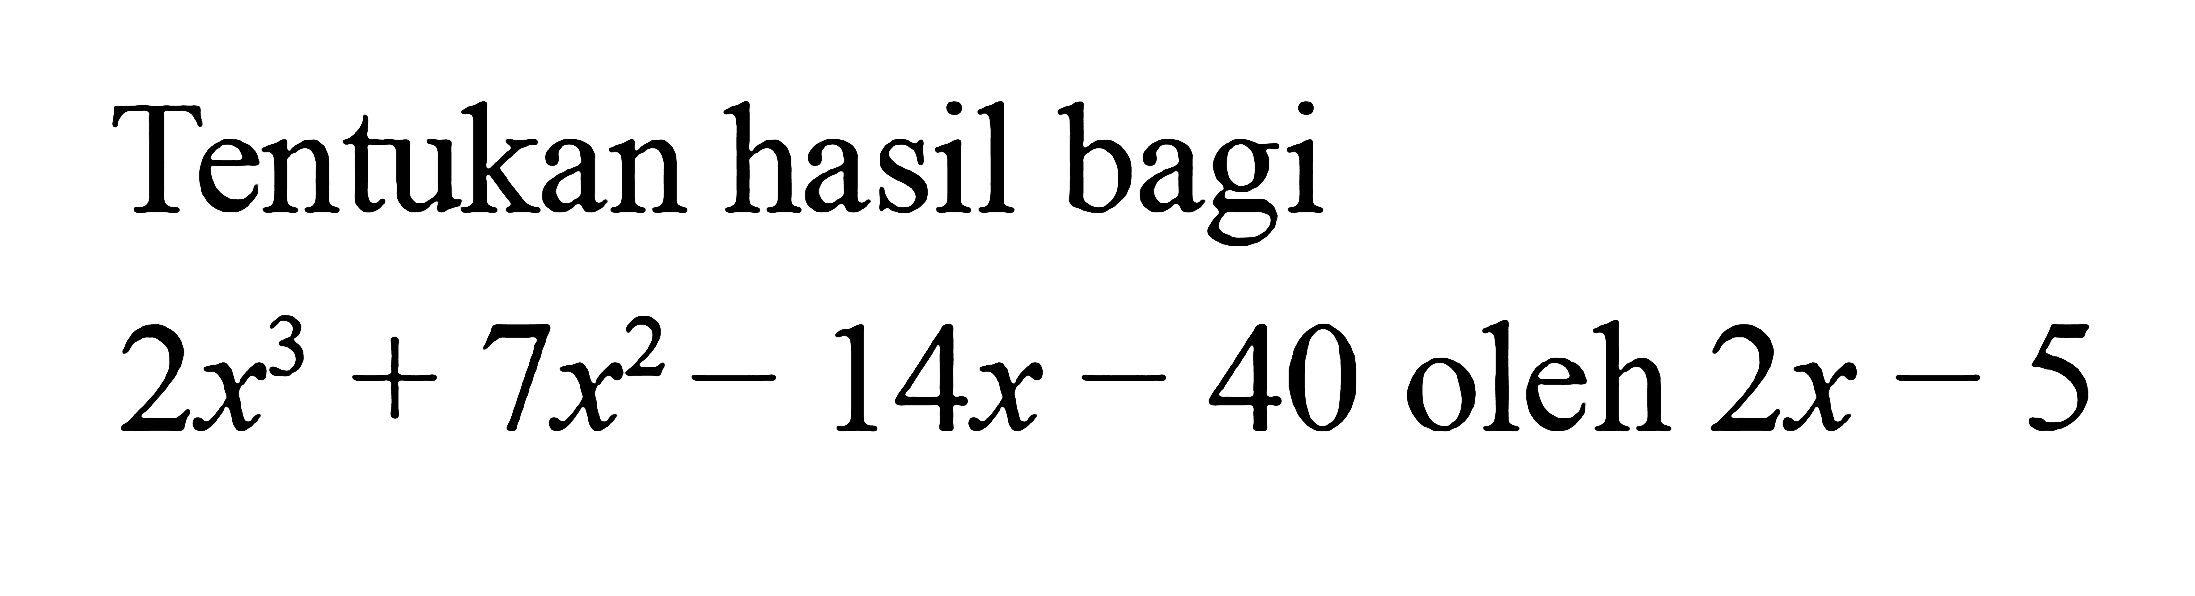 Tentukan hasil bagi 2x^3+7x^2-14x-40 oleh 2x-5